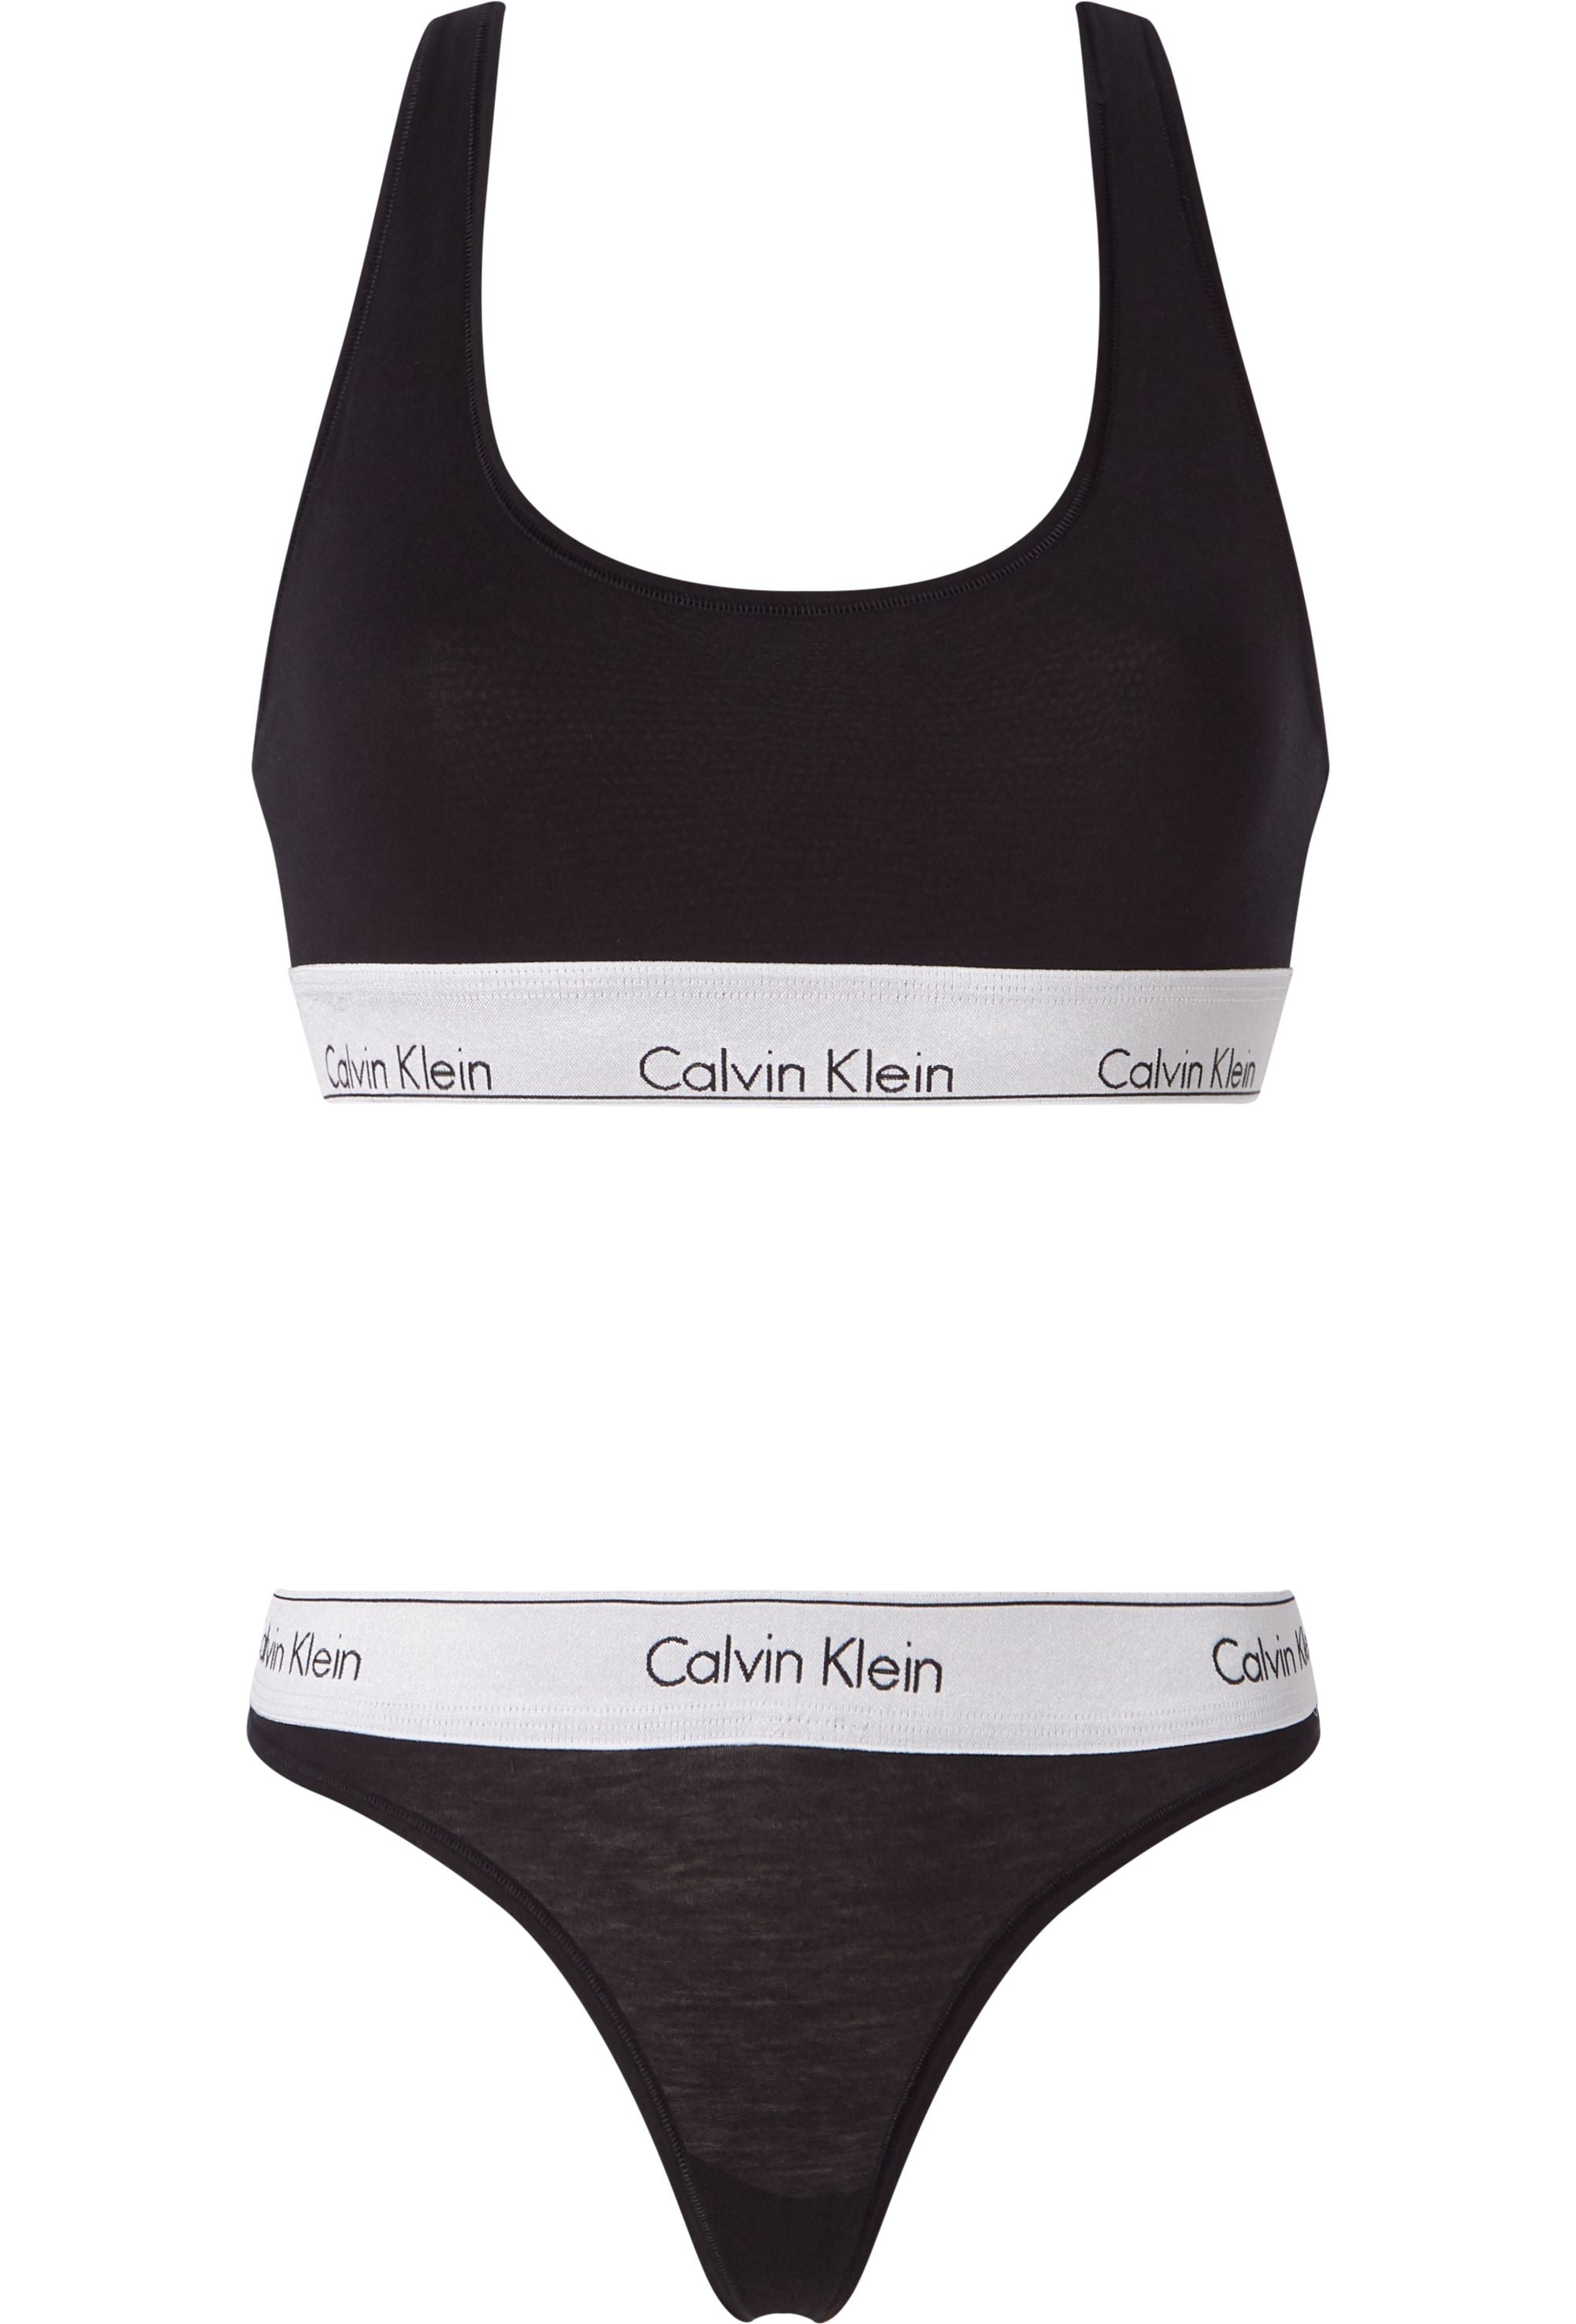 Calvin Klein Unlined Bralett/Thong Set Black/Silver